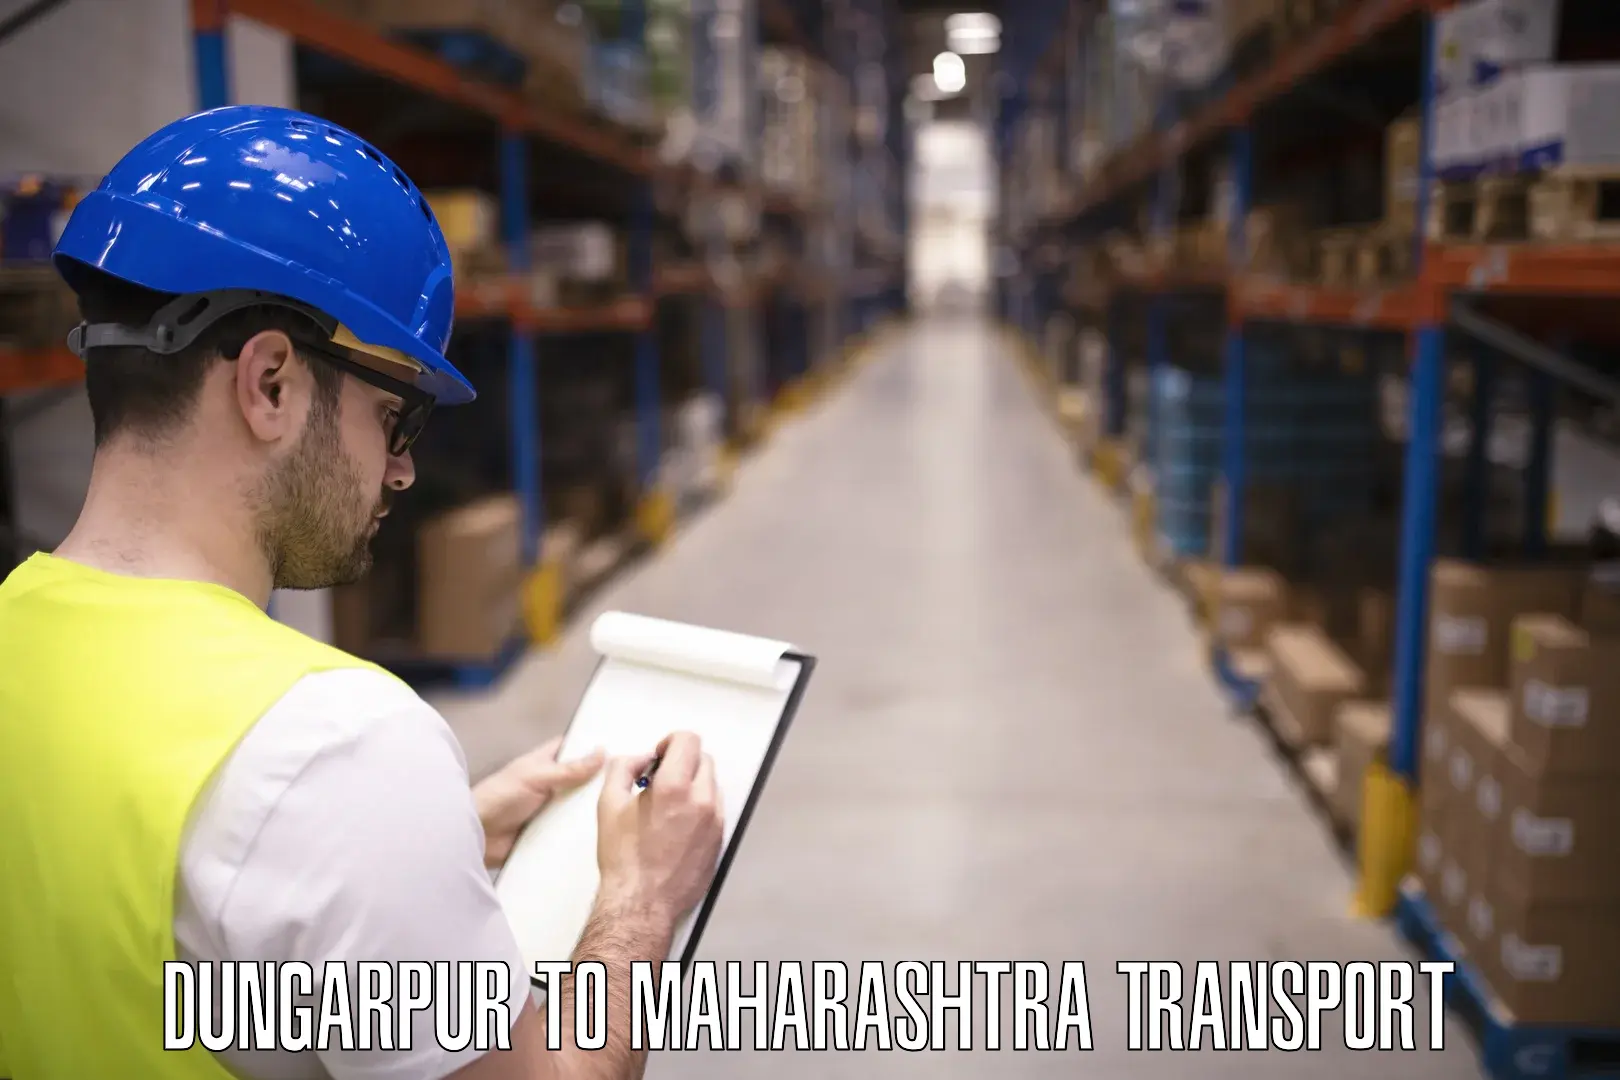 Commercial transport service Dungarpur to Maharashtra